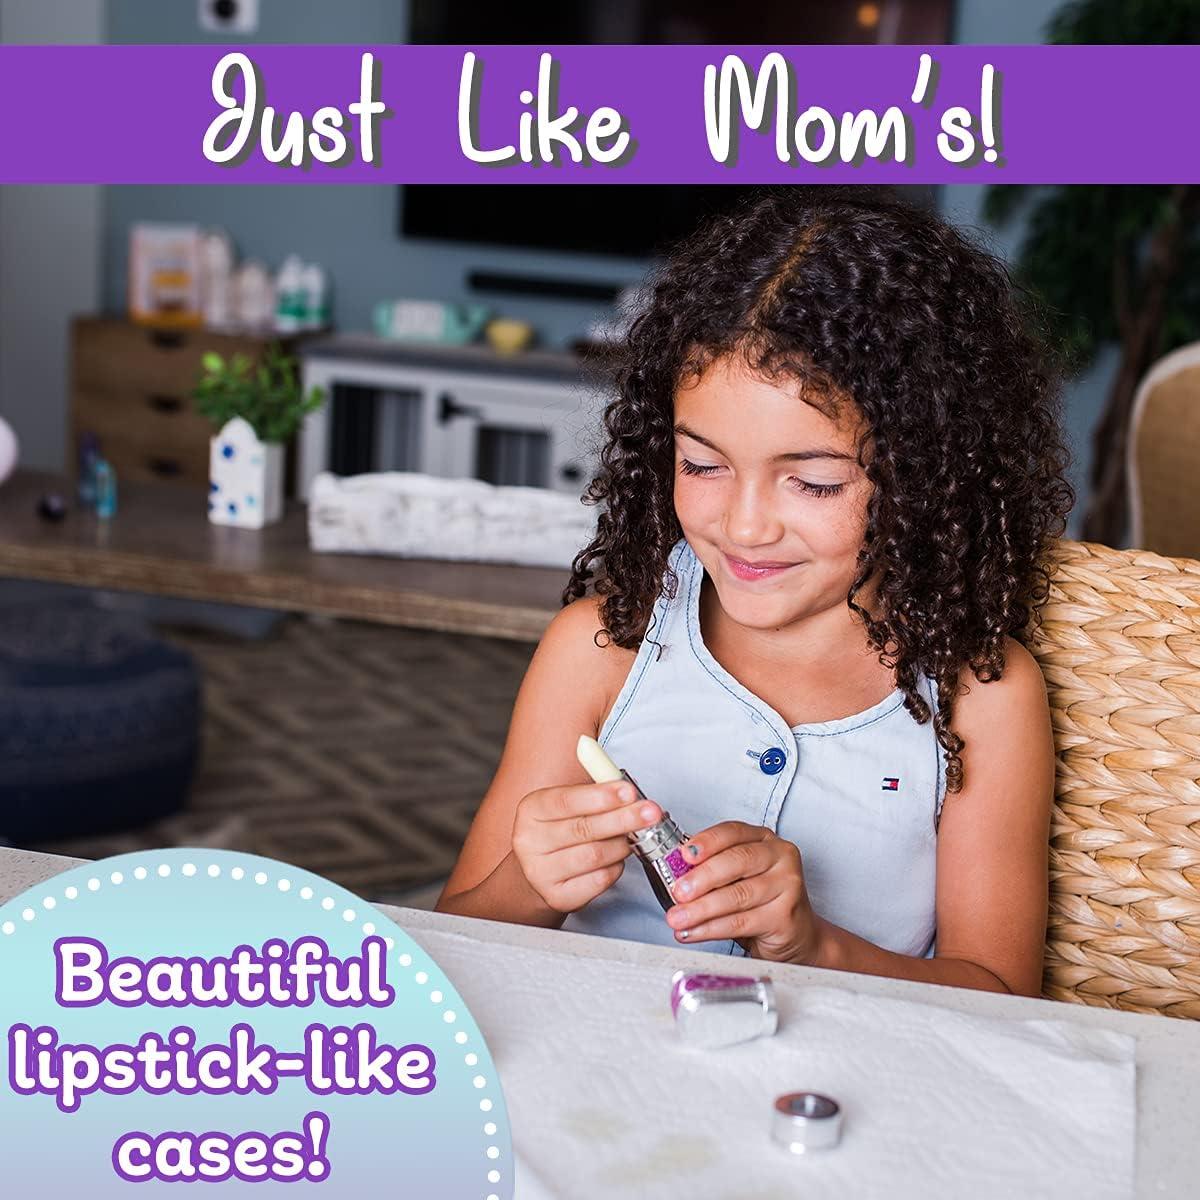 PURPLE LADYBUG Kids Lip Balm Making Kit with Natural Ingredients - Great 8  Year Old Girl Gifts